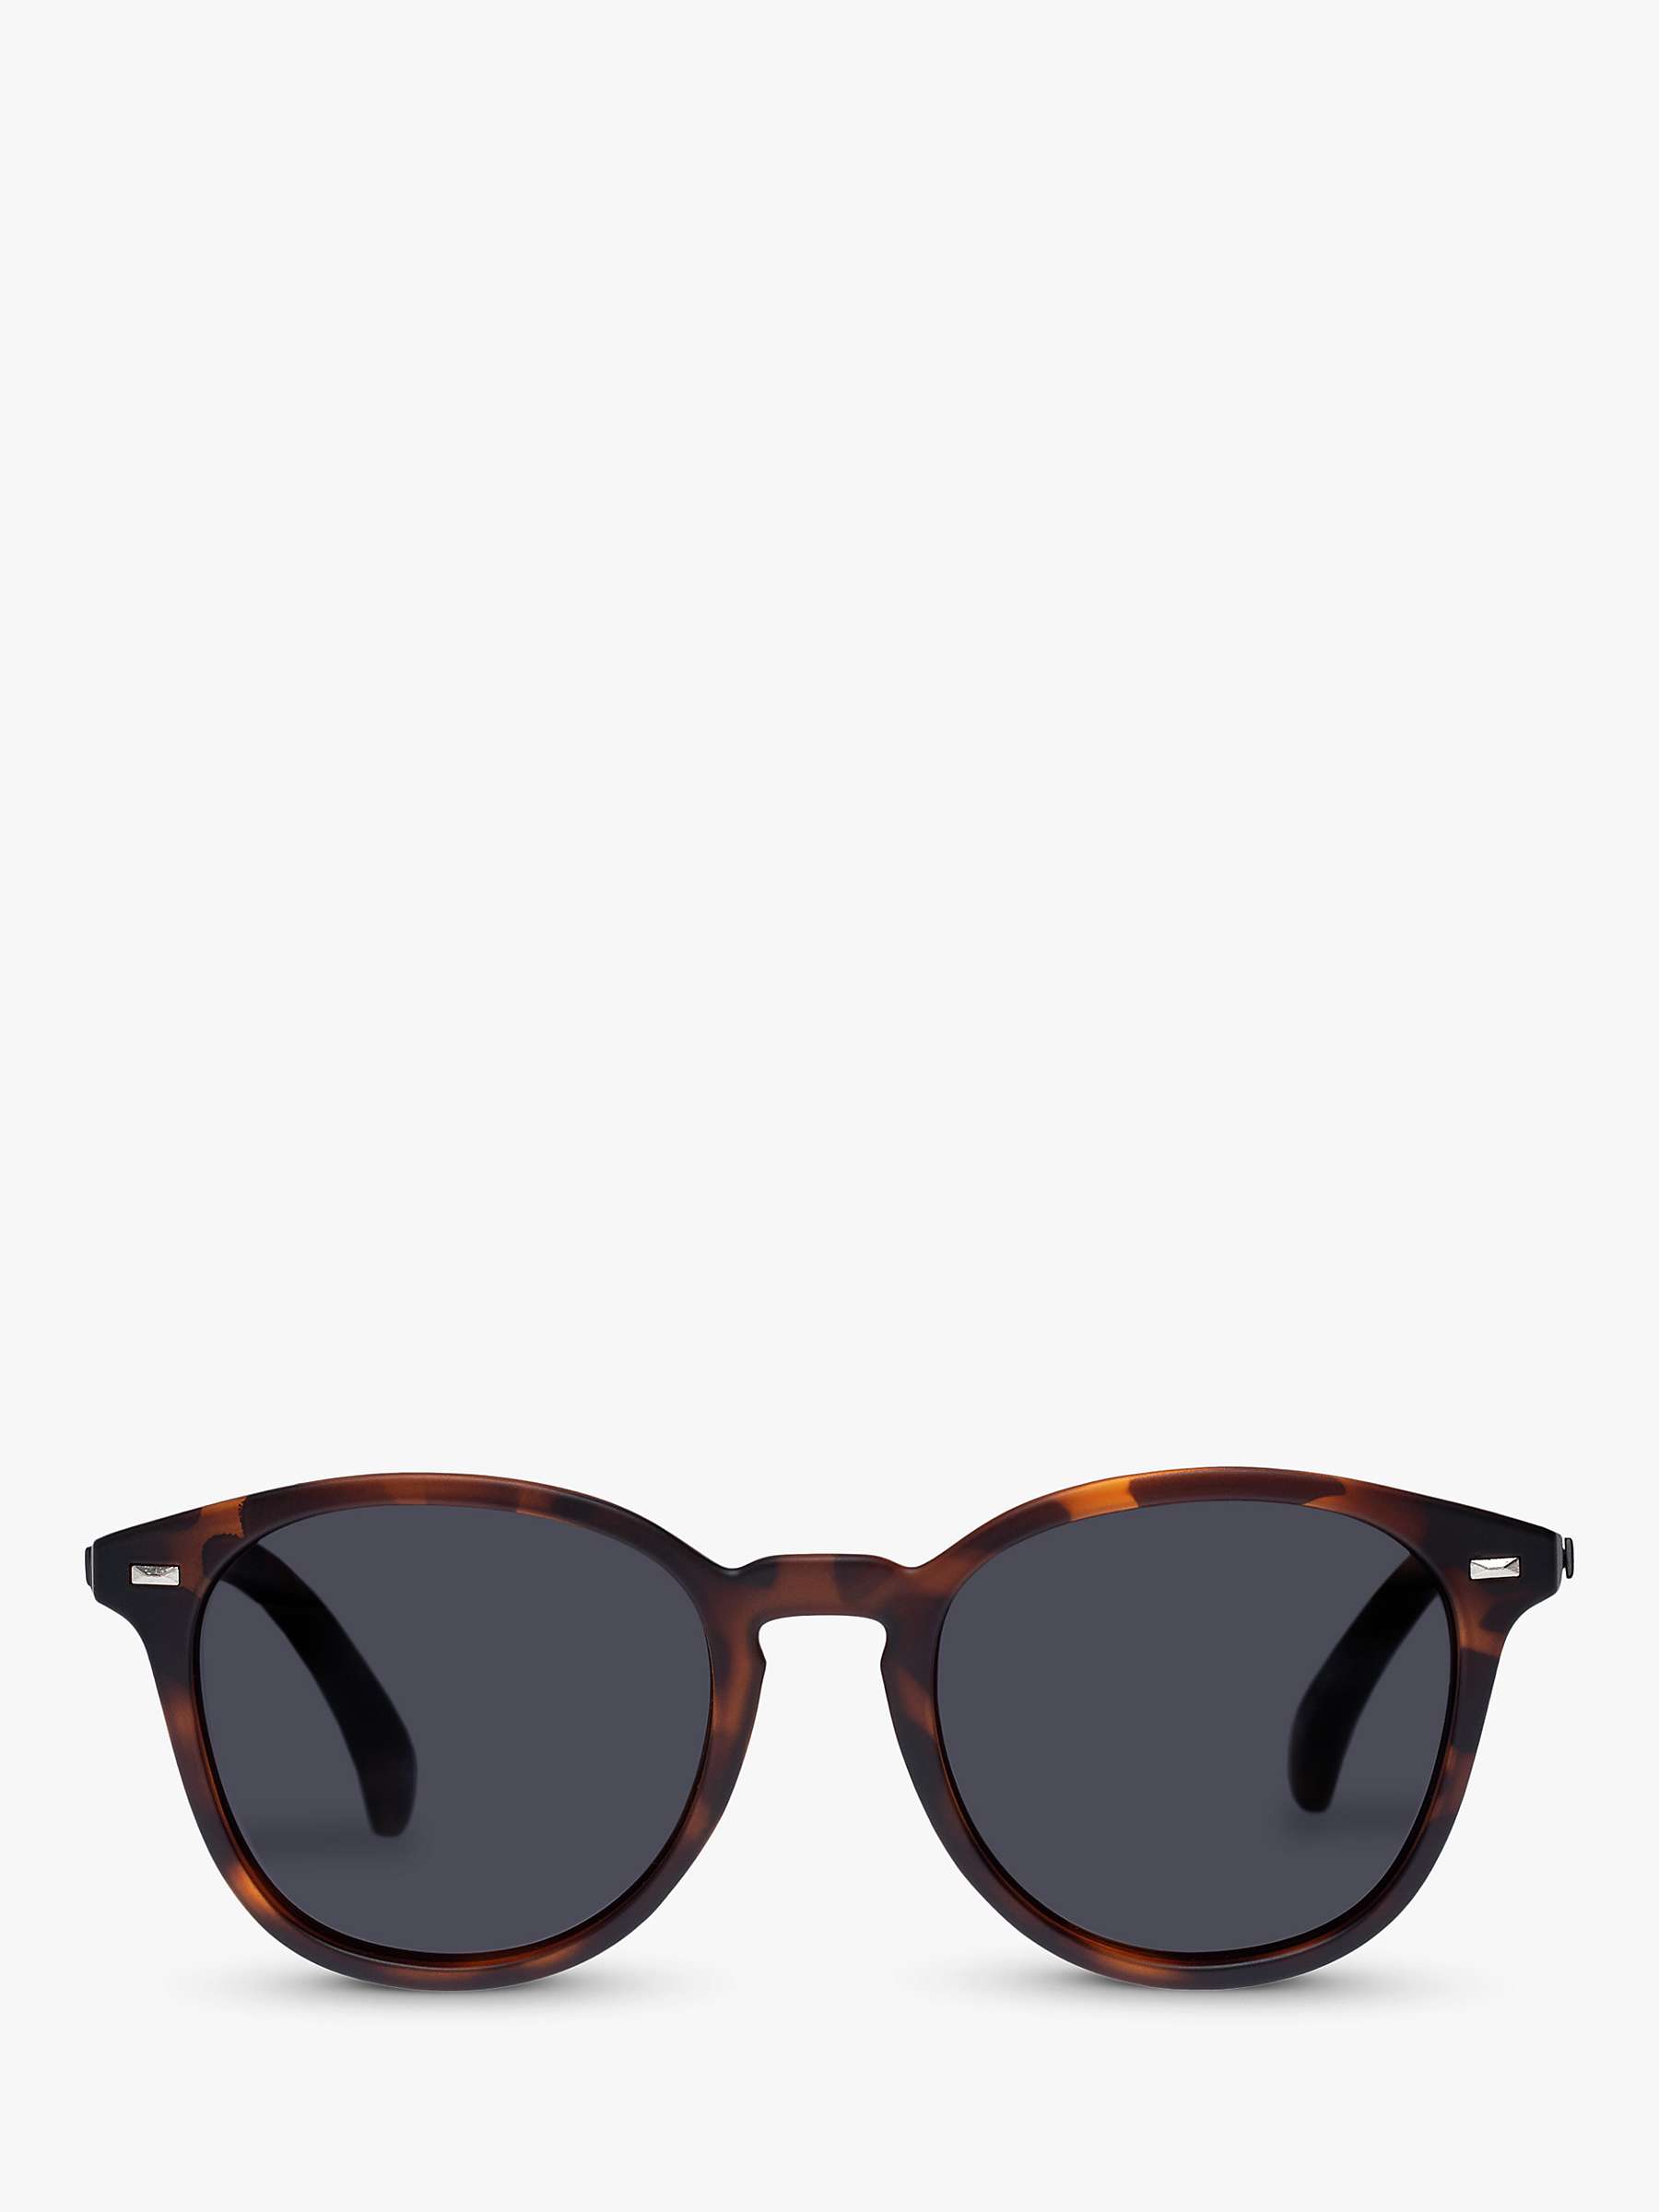 Buy Le Specs L5000144 Unisex Bandwagon Polarised Round Sunglasses, Tortoise/Black Online at johnlewis.com